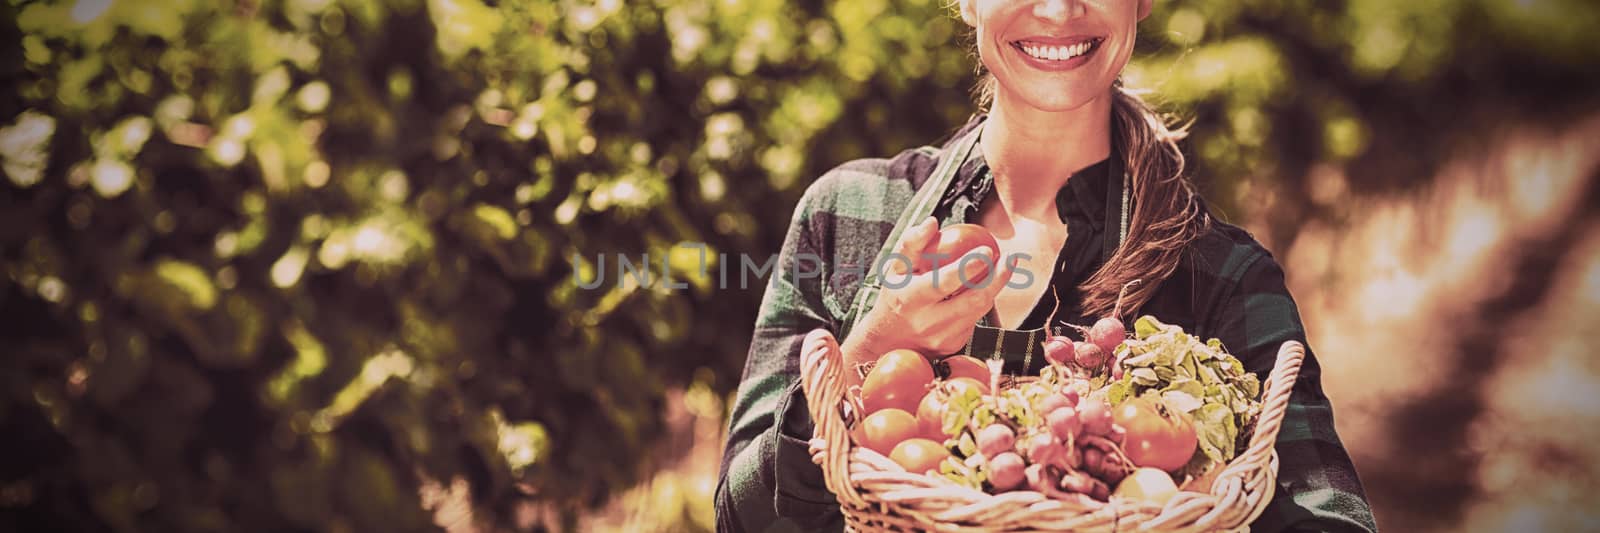 Portrait of happy female farmer holding a basket of vegetables by Wavebreakmedia